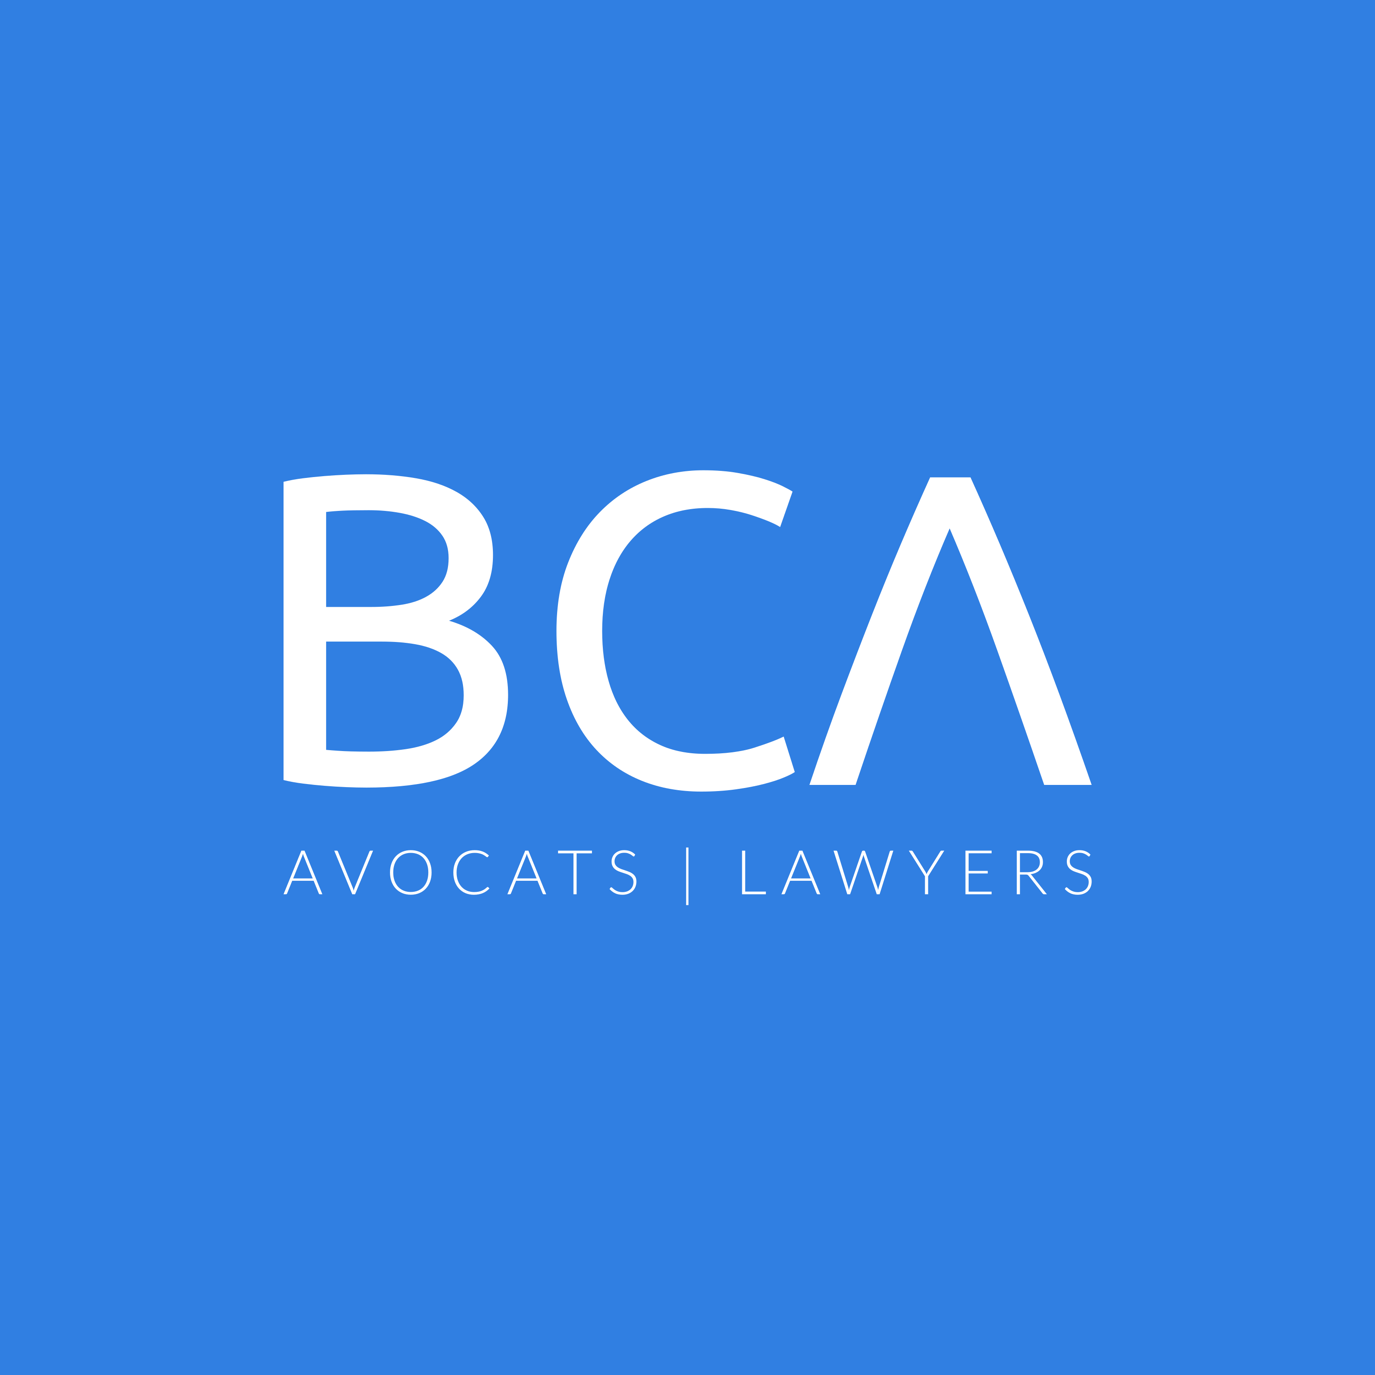 BCA AVOCATS | LAWYERS